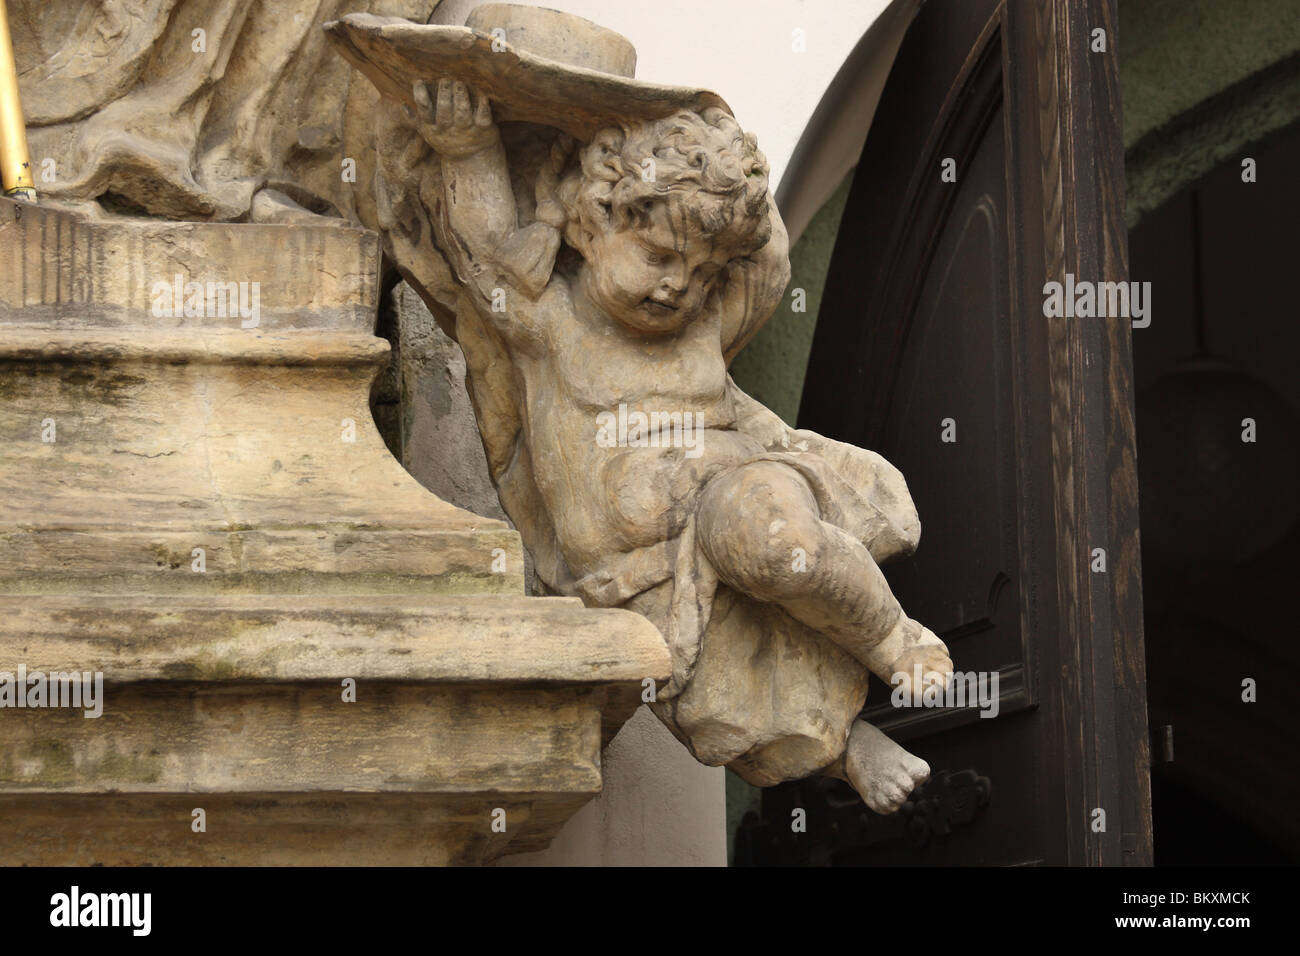 Cherub sculpture in Minoritsky cloister, Opava. Czech Republic. Stock Photo